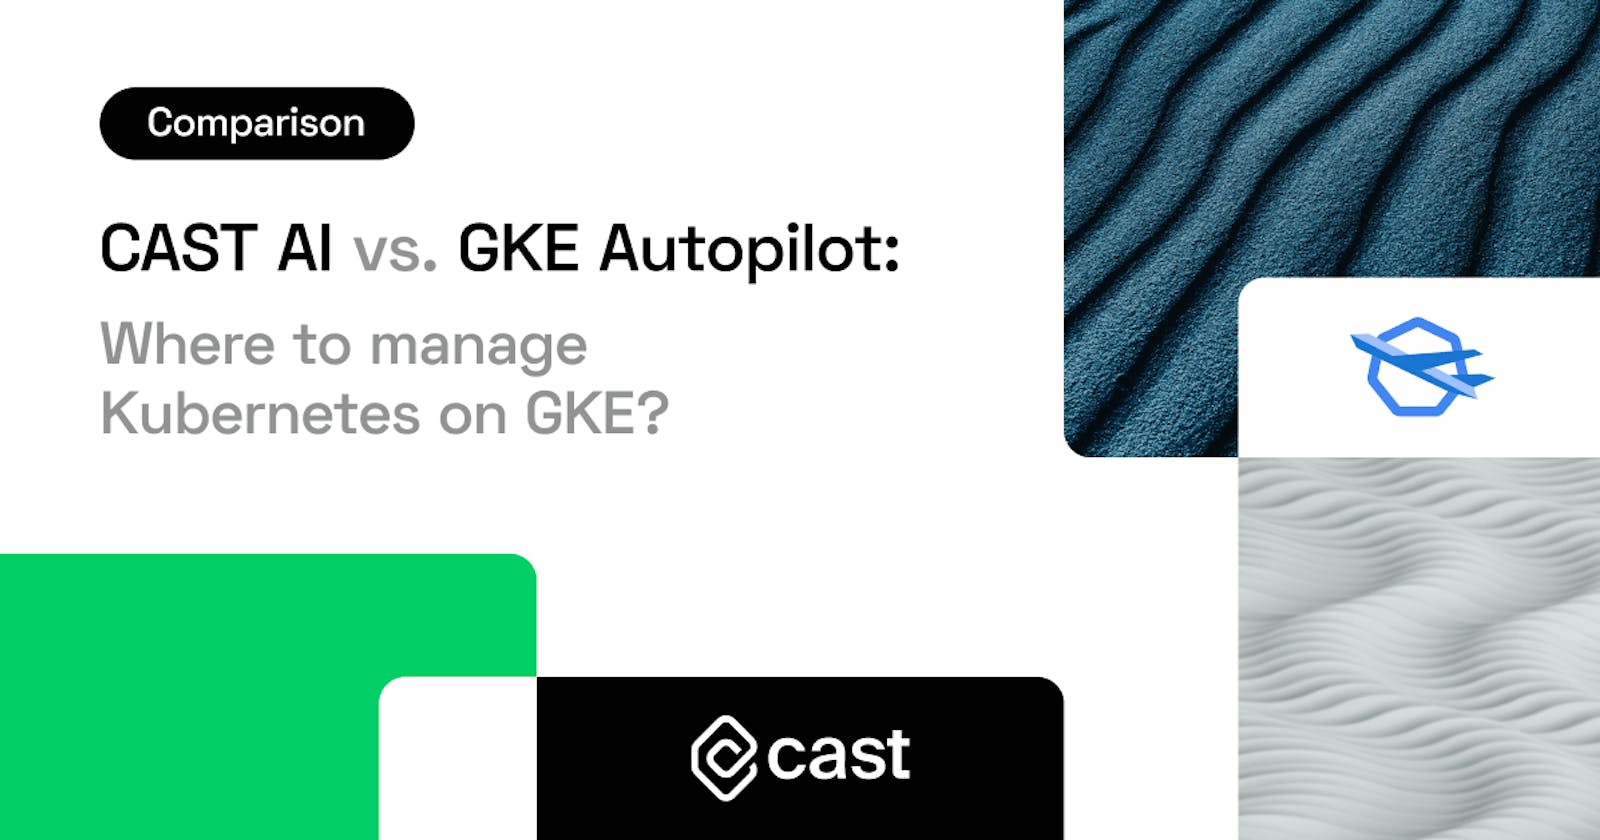 CAST AI vs. GKE Autopilot: Where to manage Kubernetes on GKE?